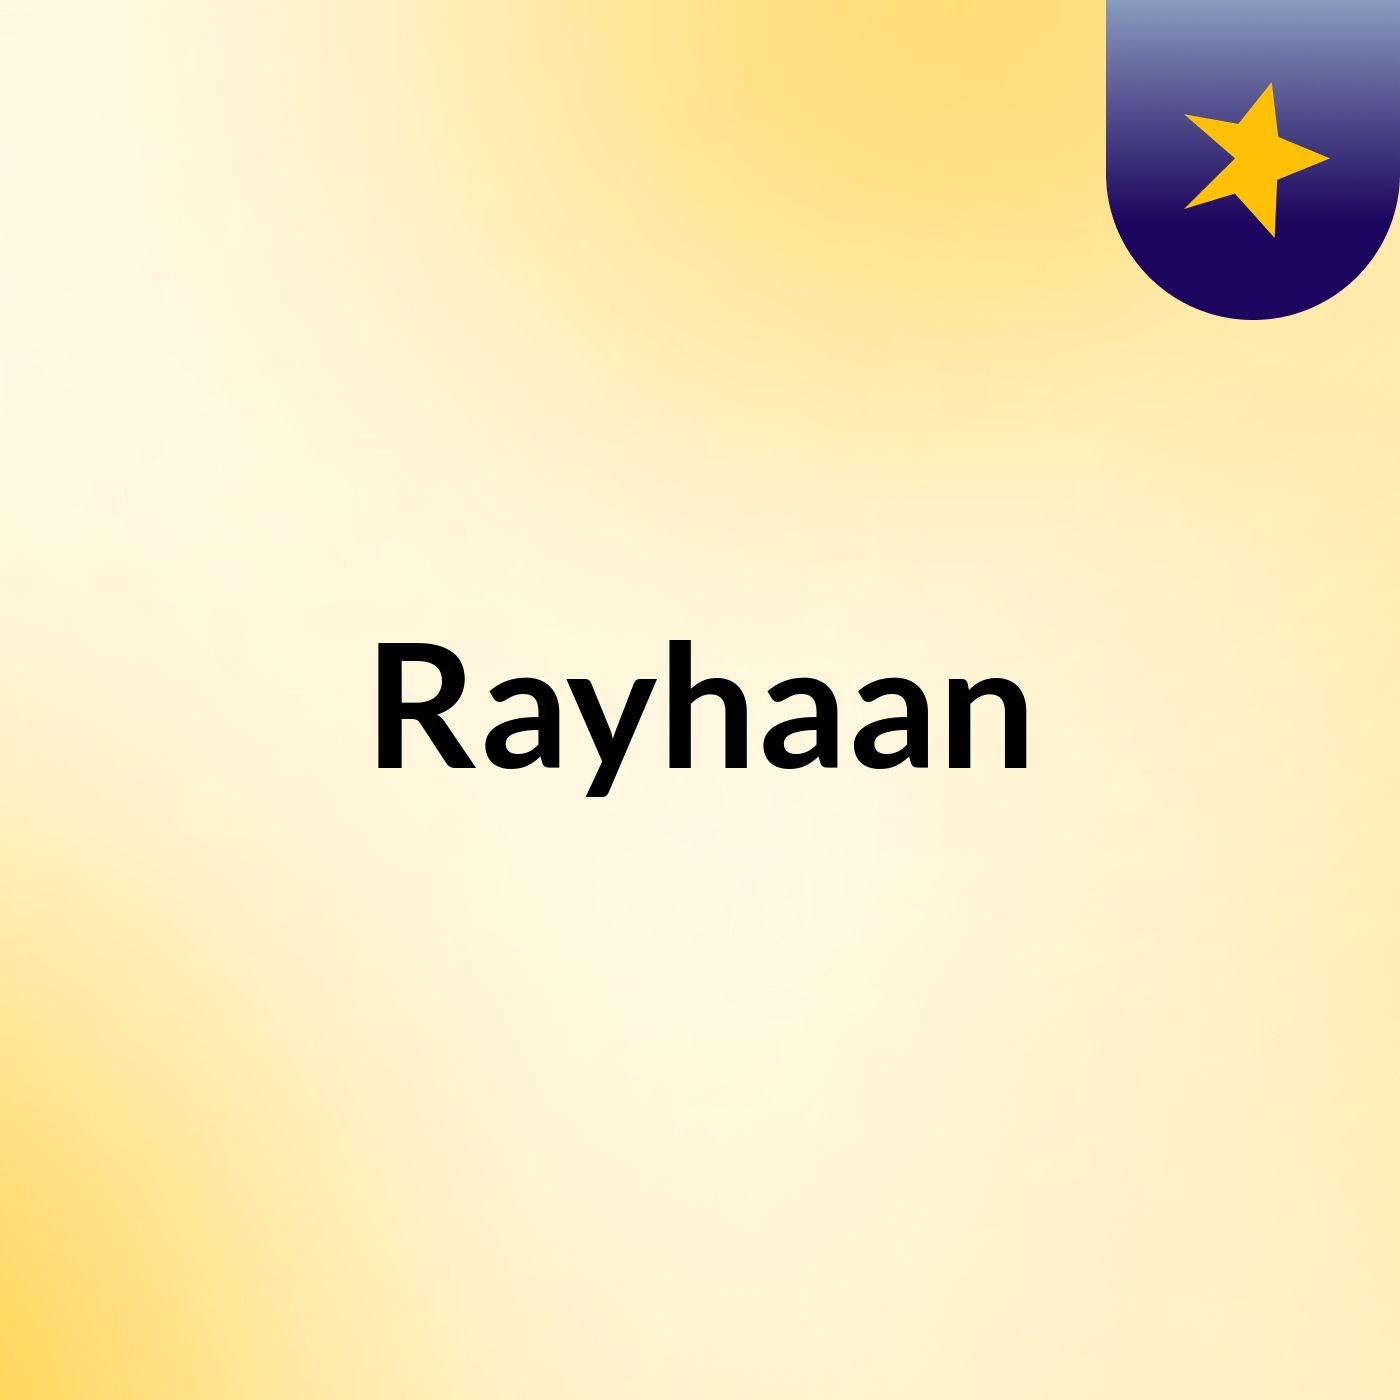 Rayhaan